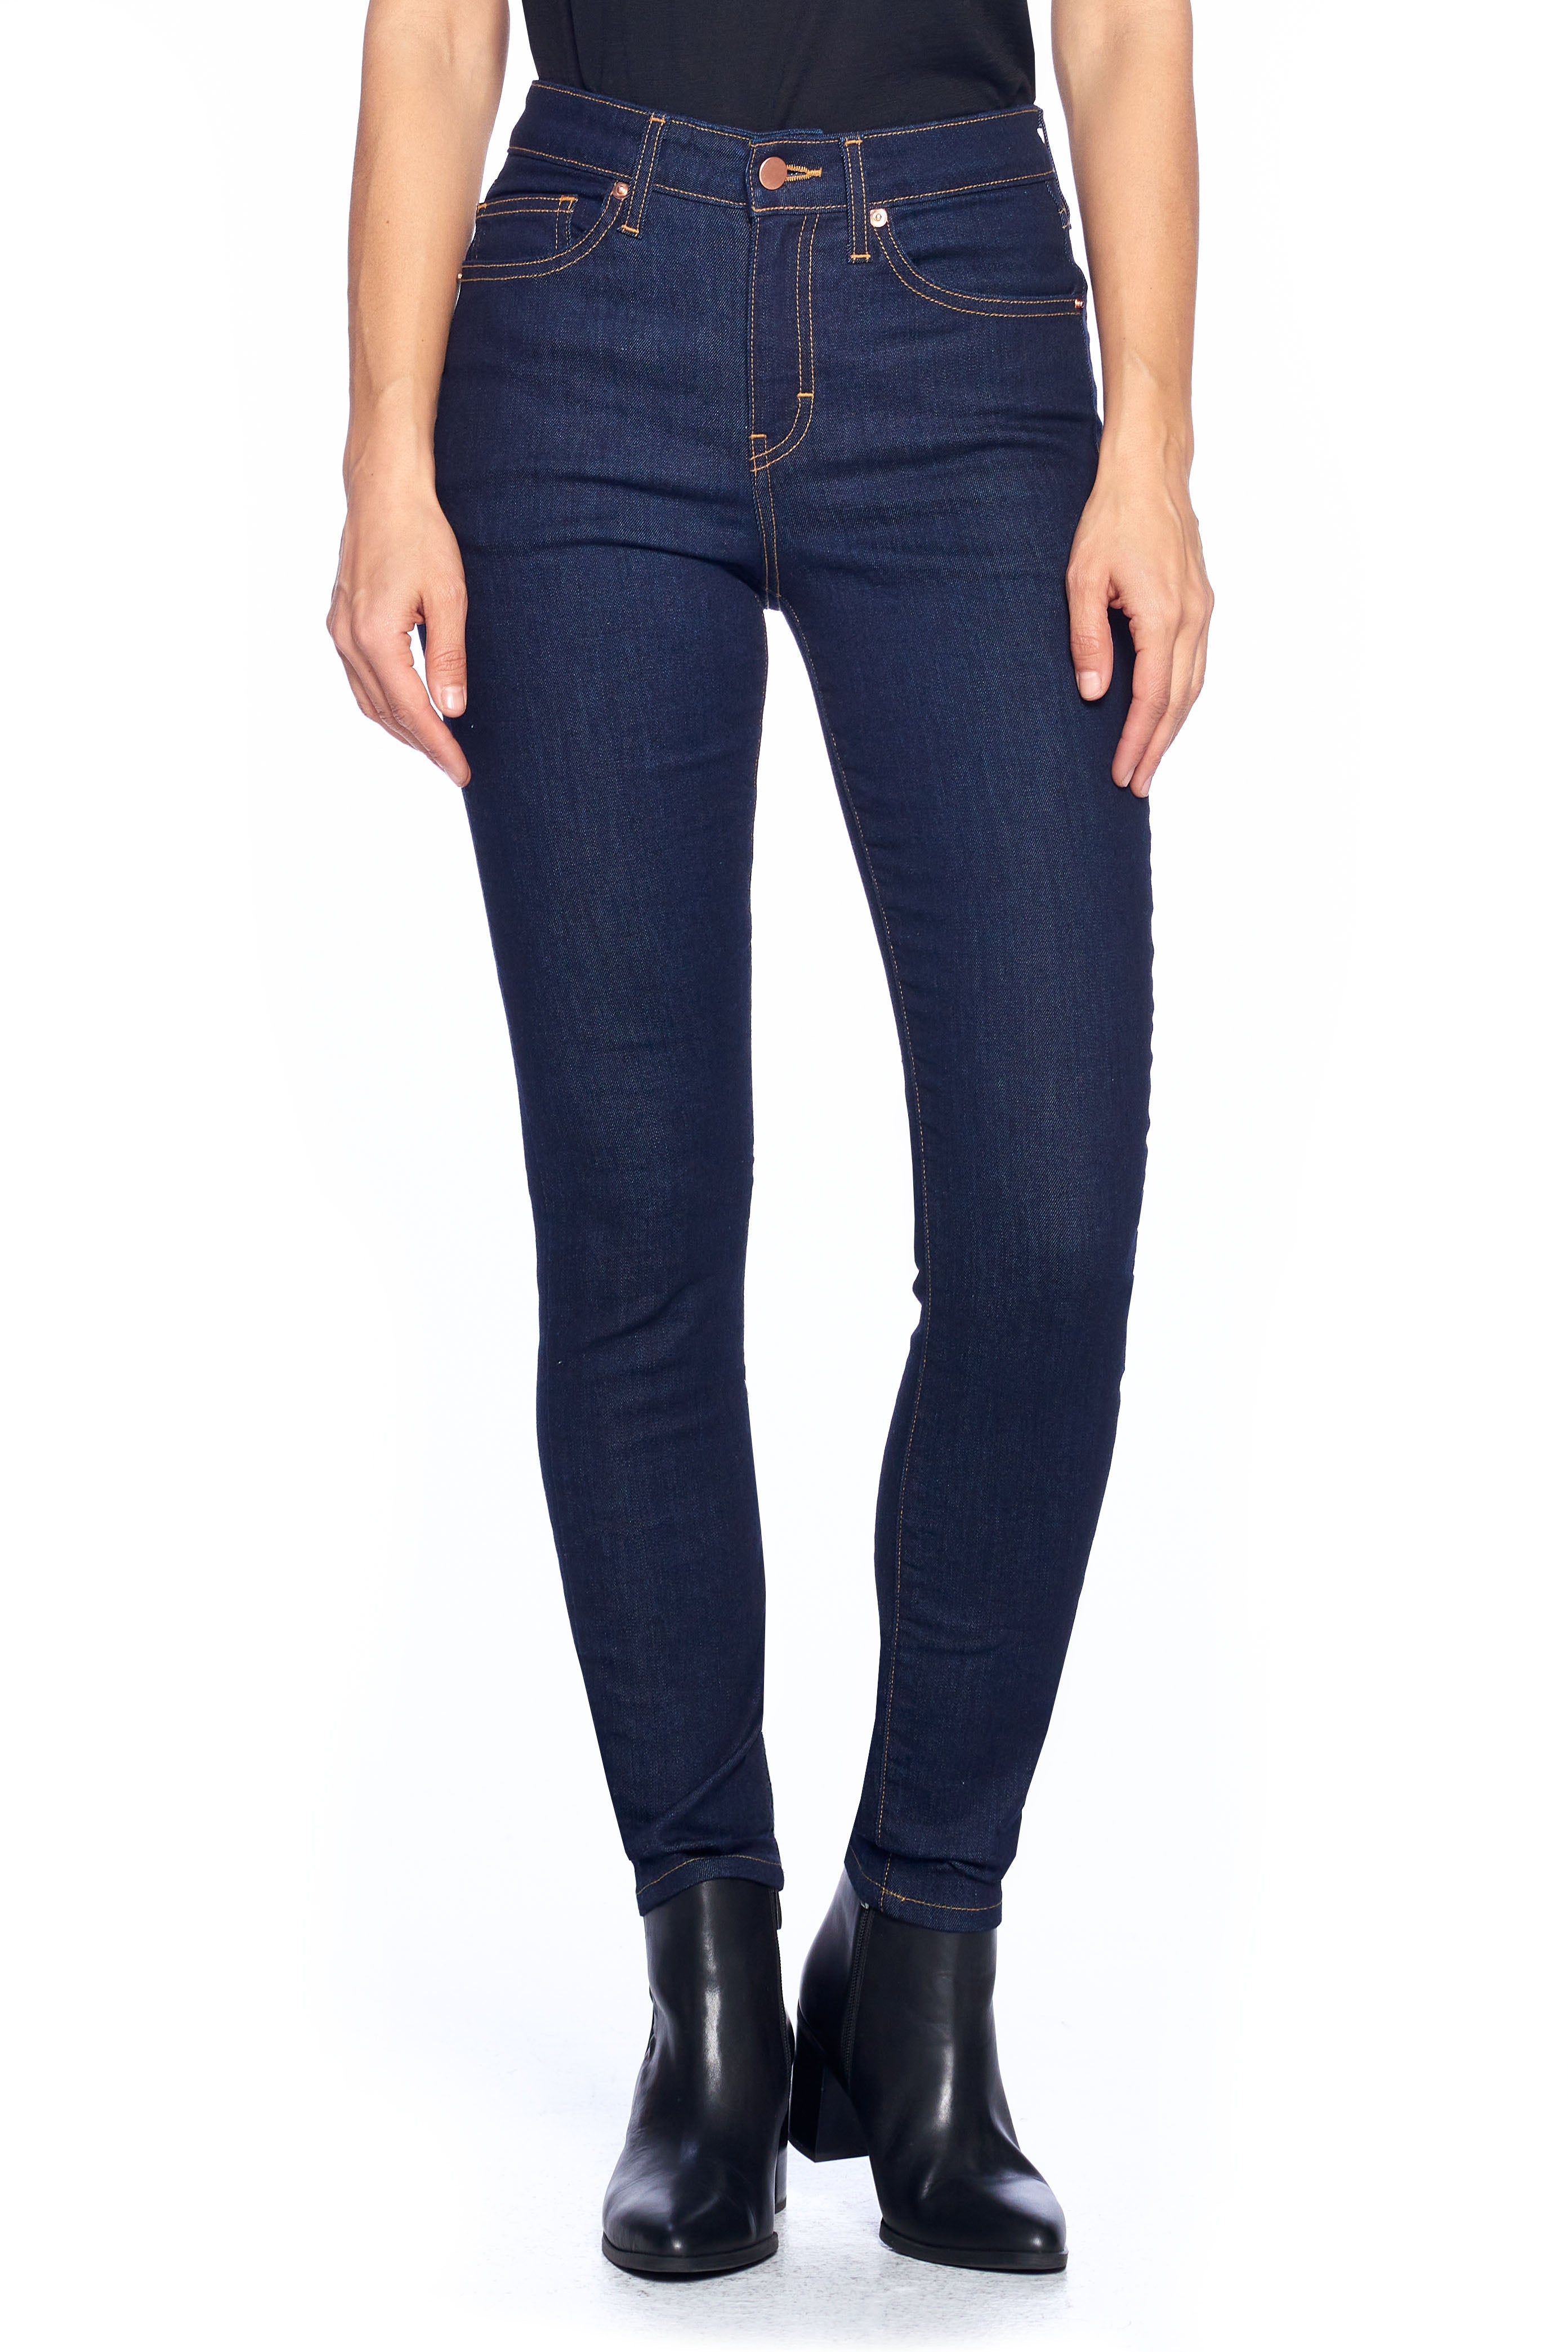 Women's Skinny Fit Jeans | Dark Indigo | Made in the USA - Aviator